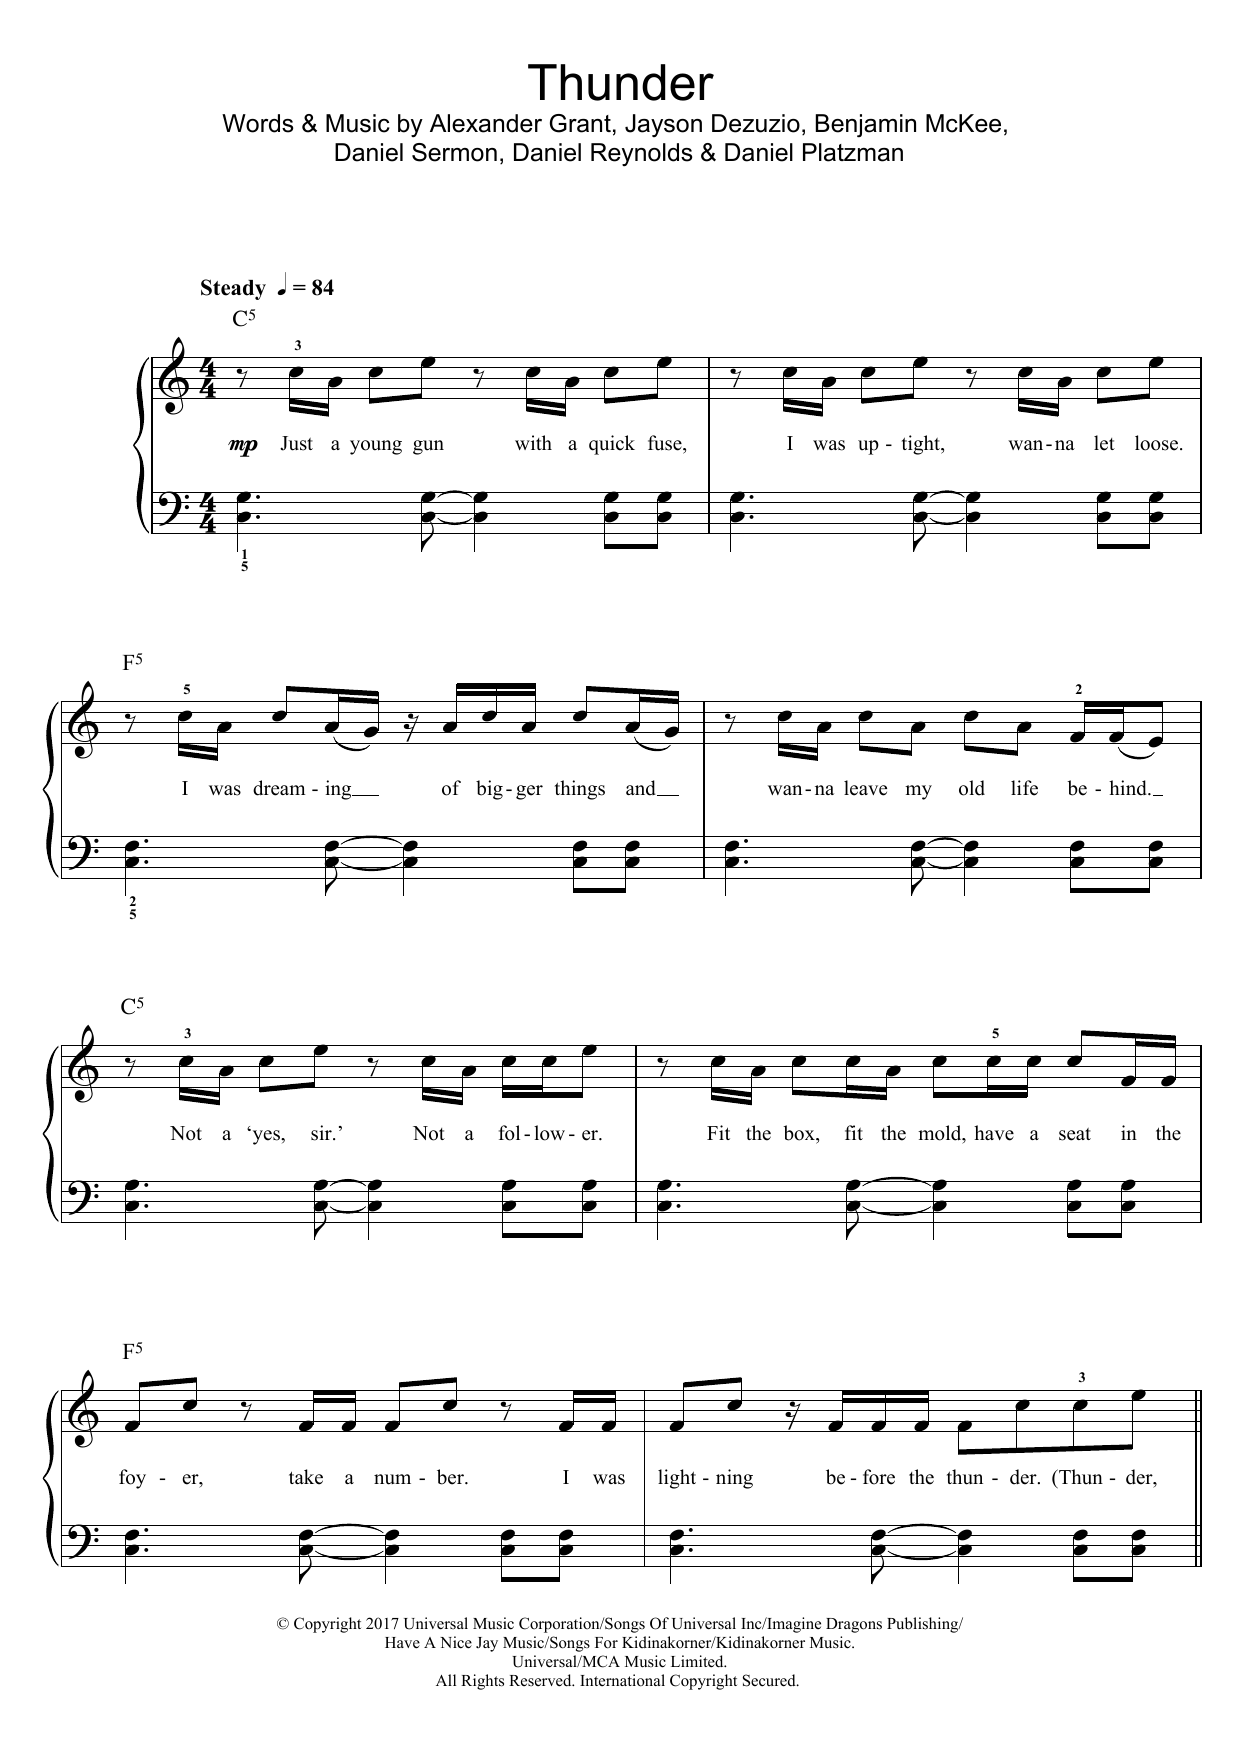 Imagine Dragons Thunder Sheet Music Notes & Chords for Lyrics & Chords - Download or Print PDF